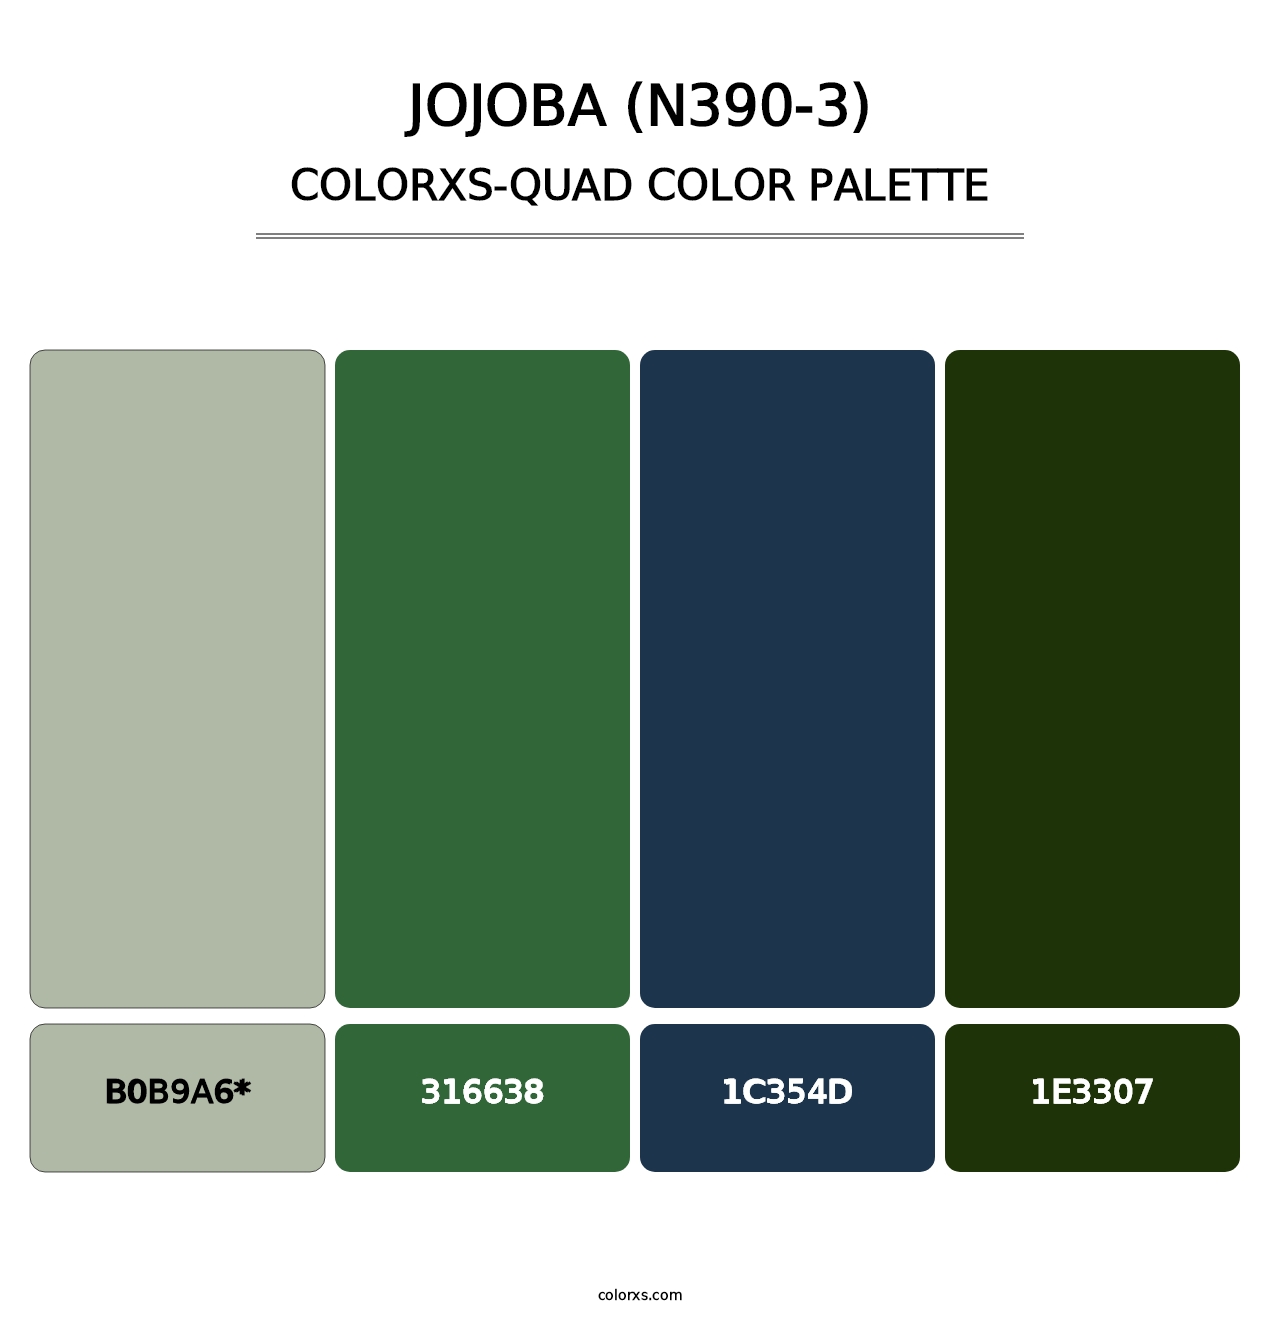 Jojoba (N390-3) - Colorxs Quad Palette